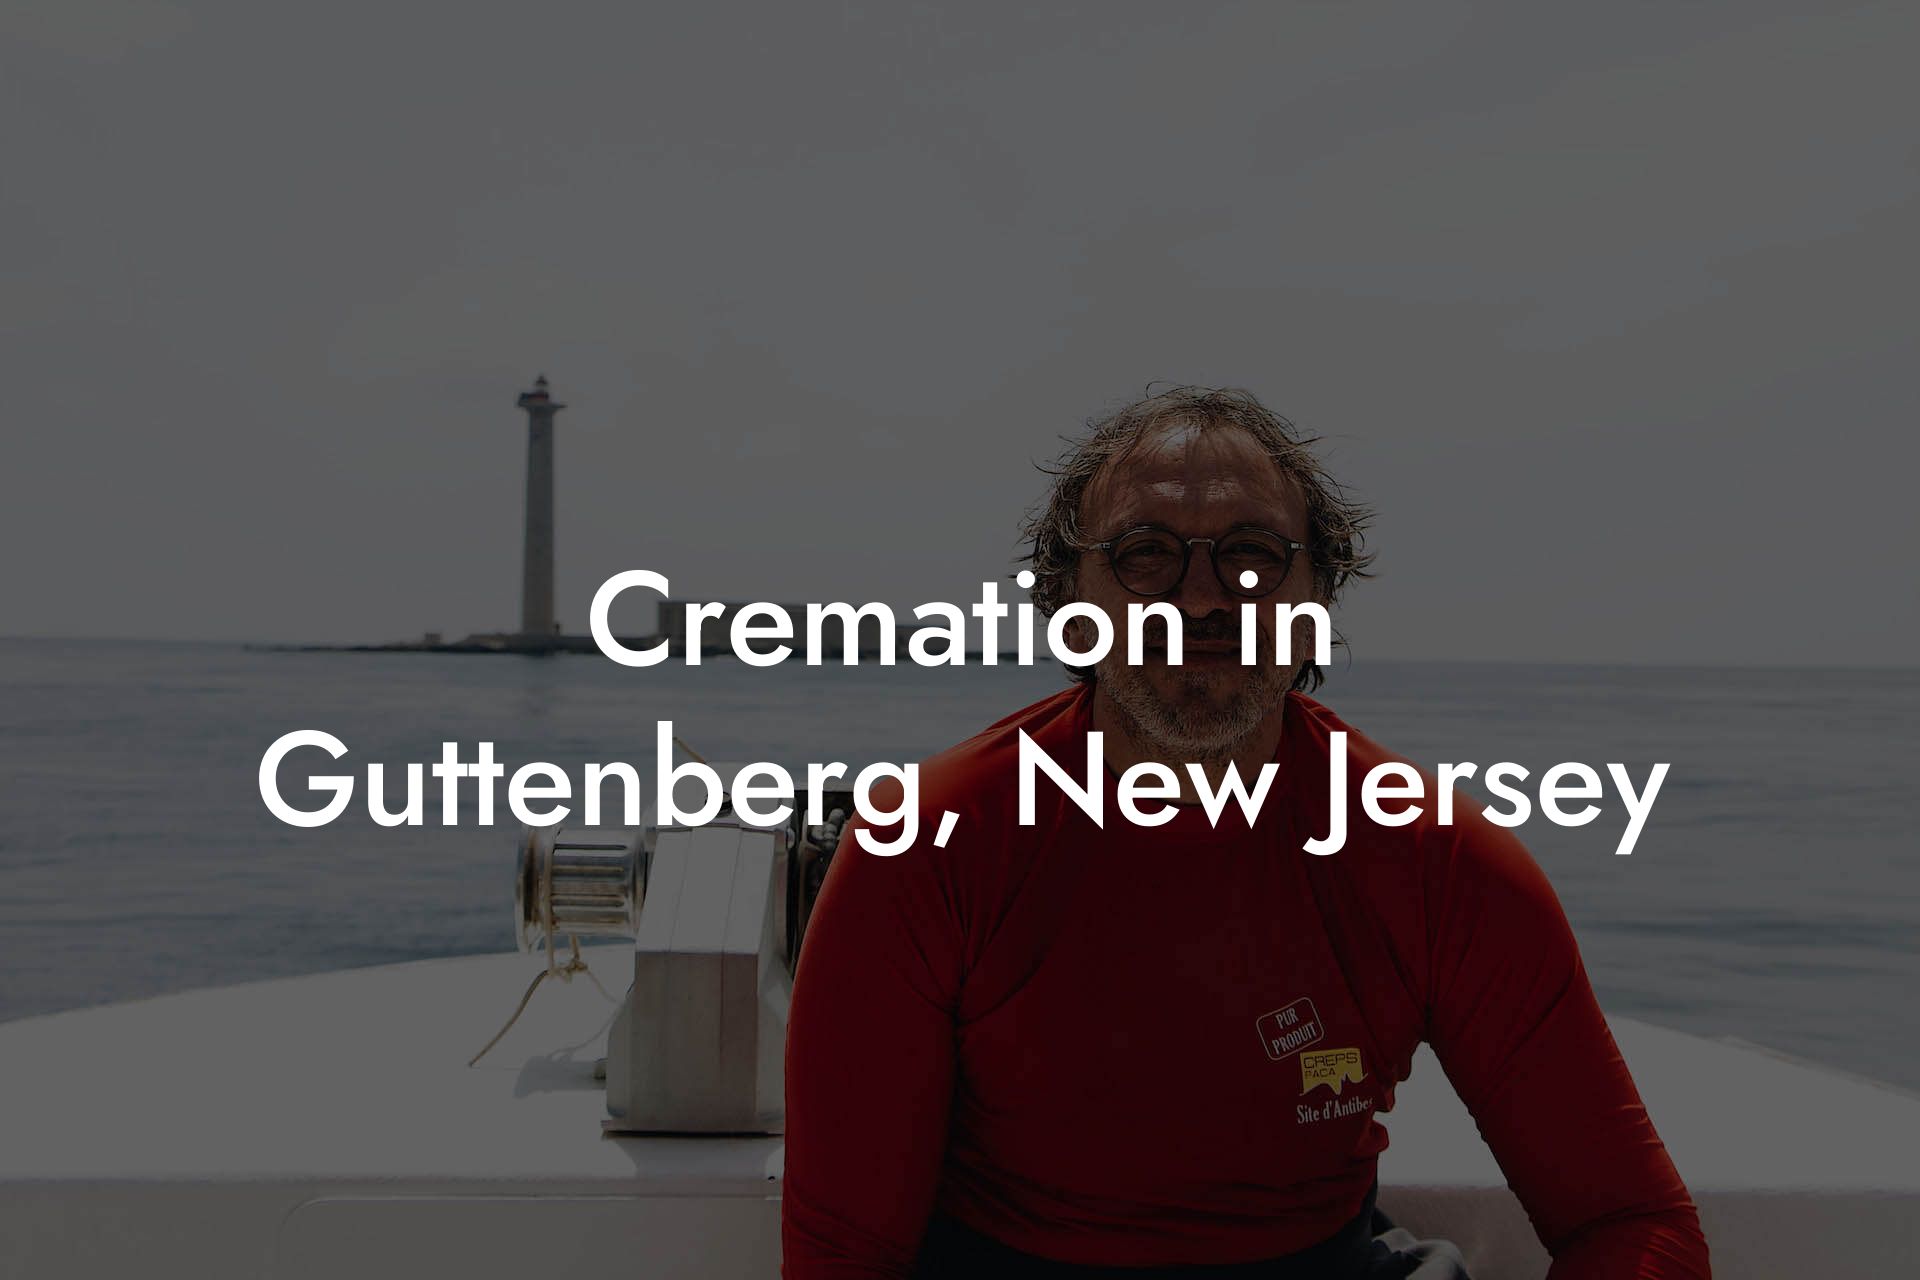 Cremation in Guttenberg, New Jersey